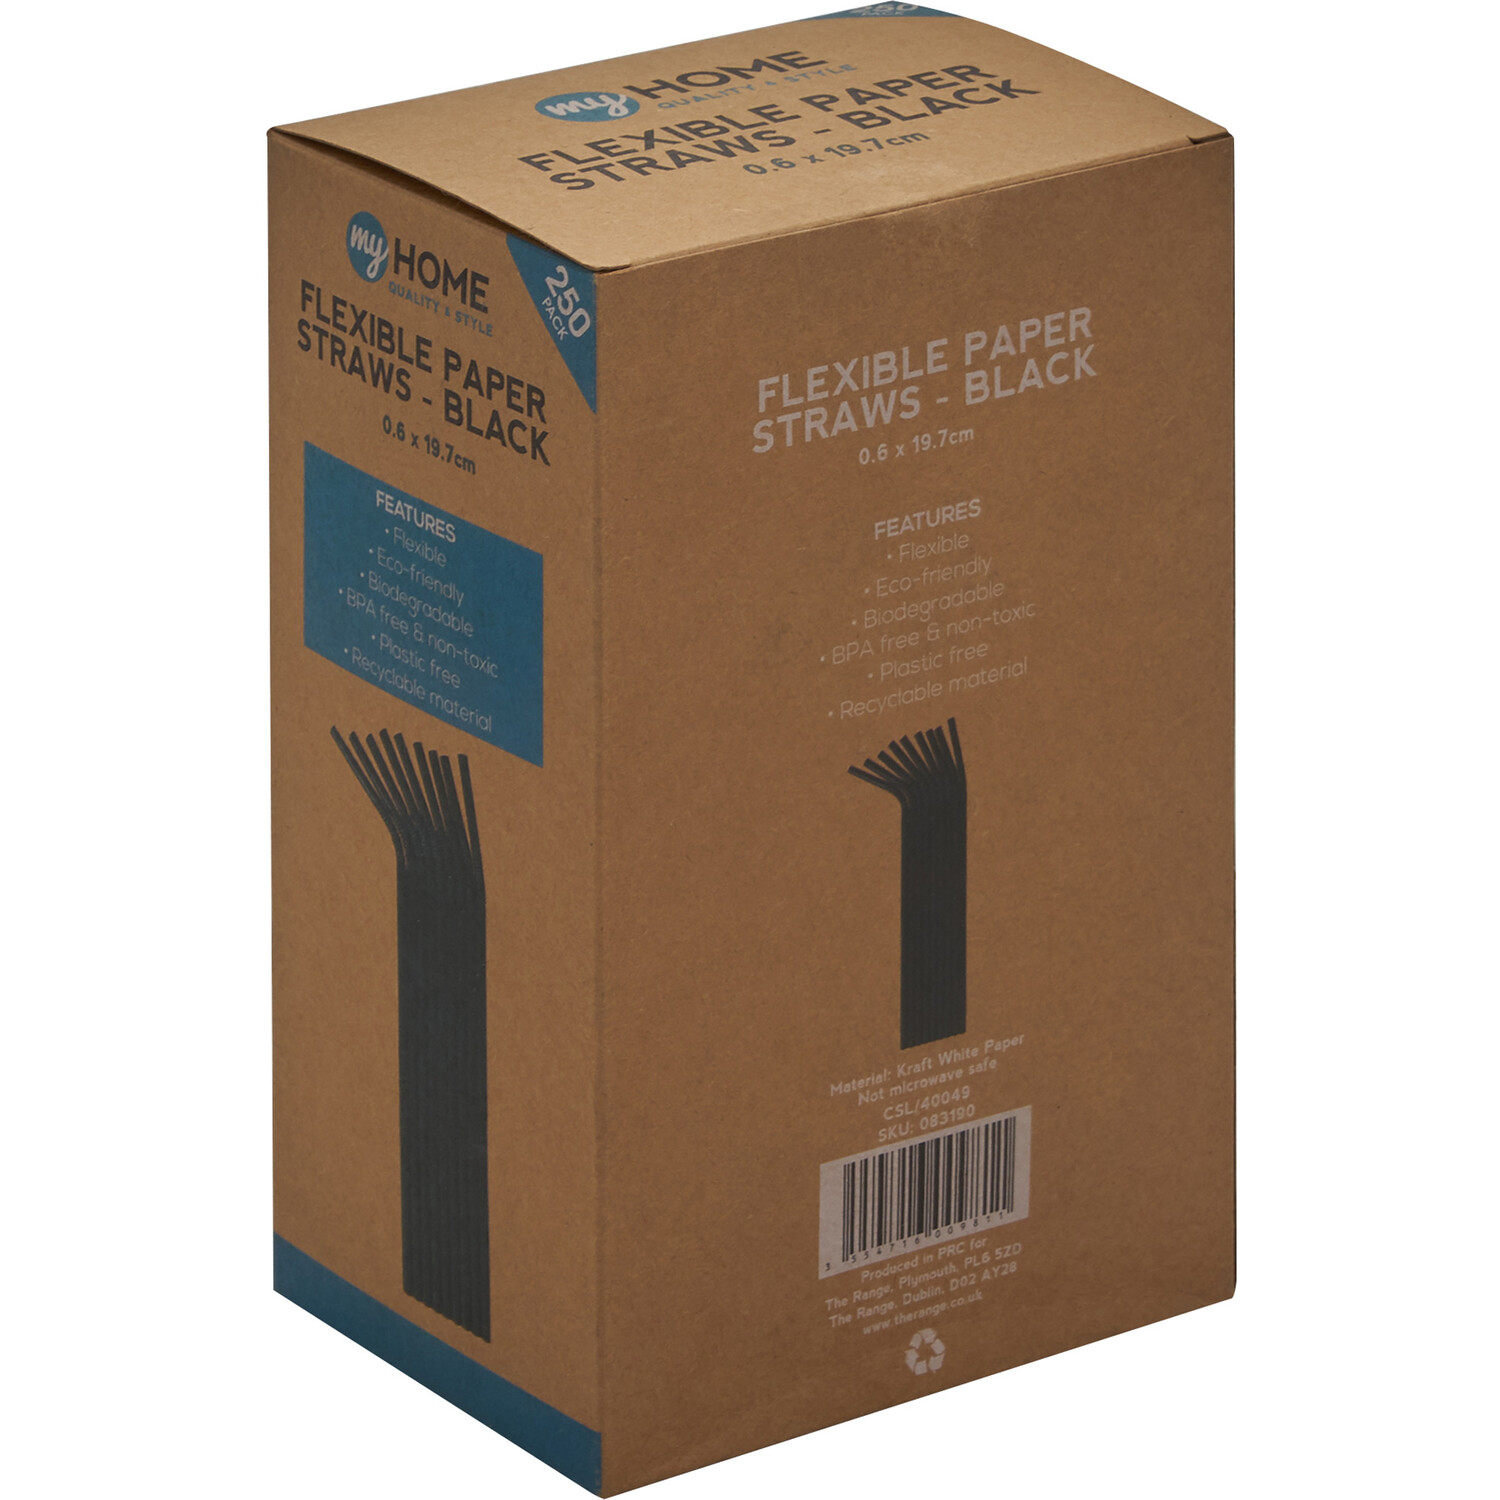 Pack of 250 Flexible Paper Straws - Black Image 3